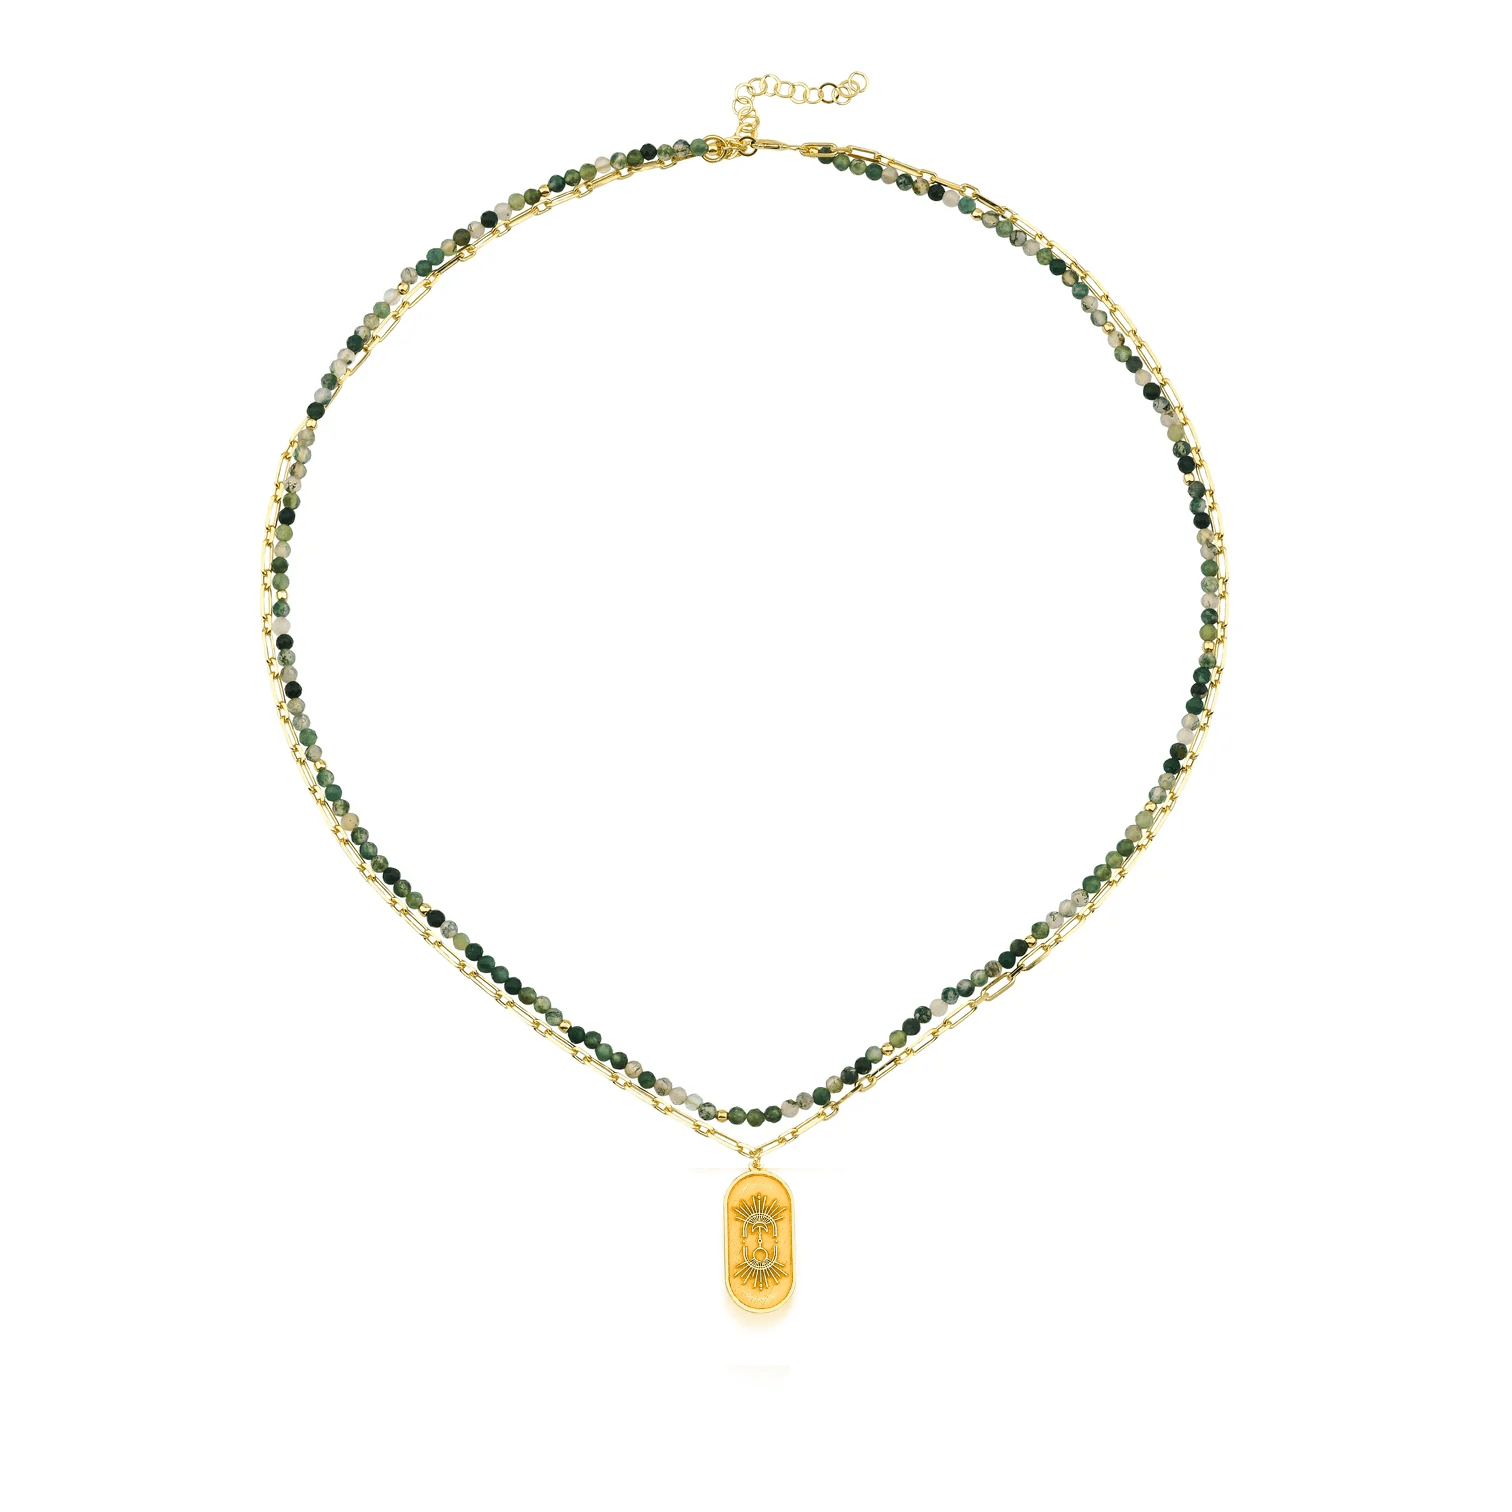 Sunlight Gem Stone Necklace - Emerald